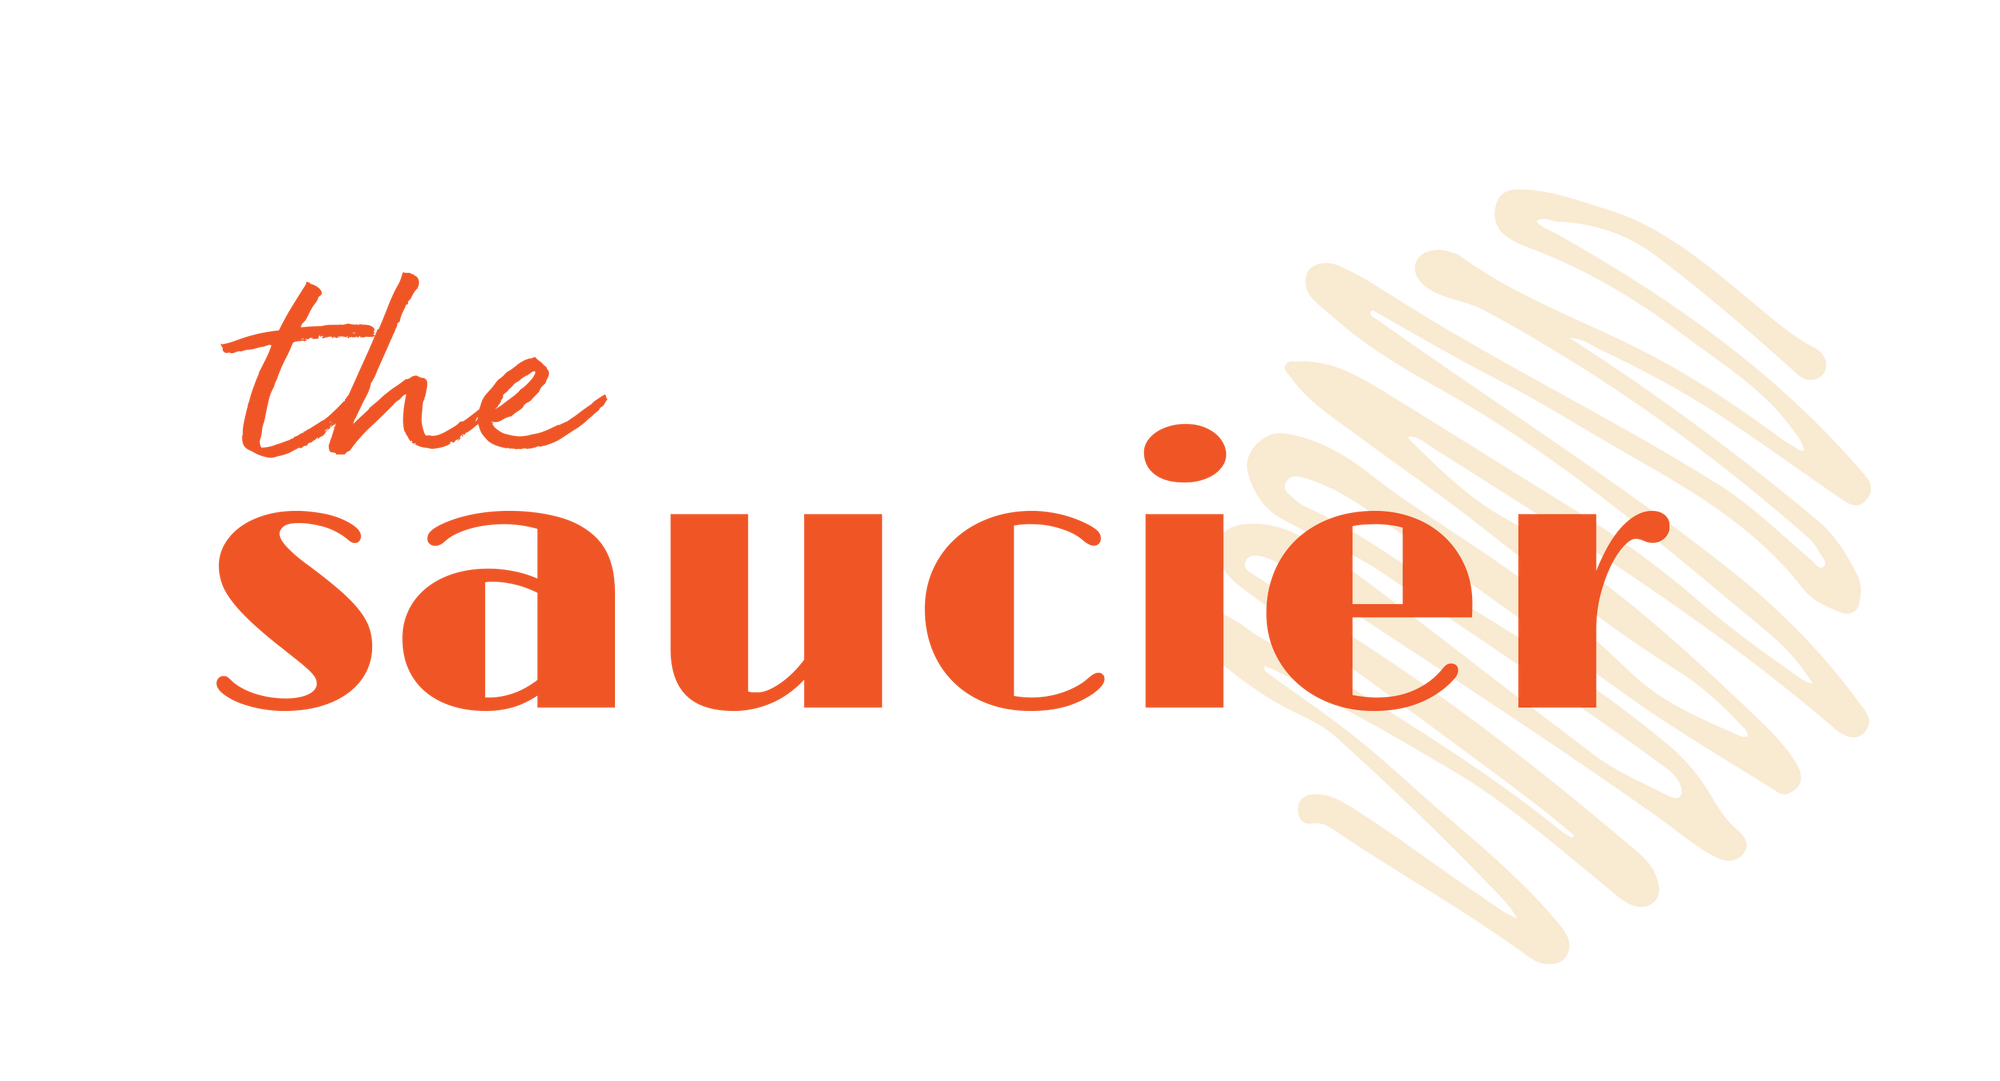 The Saucier